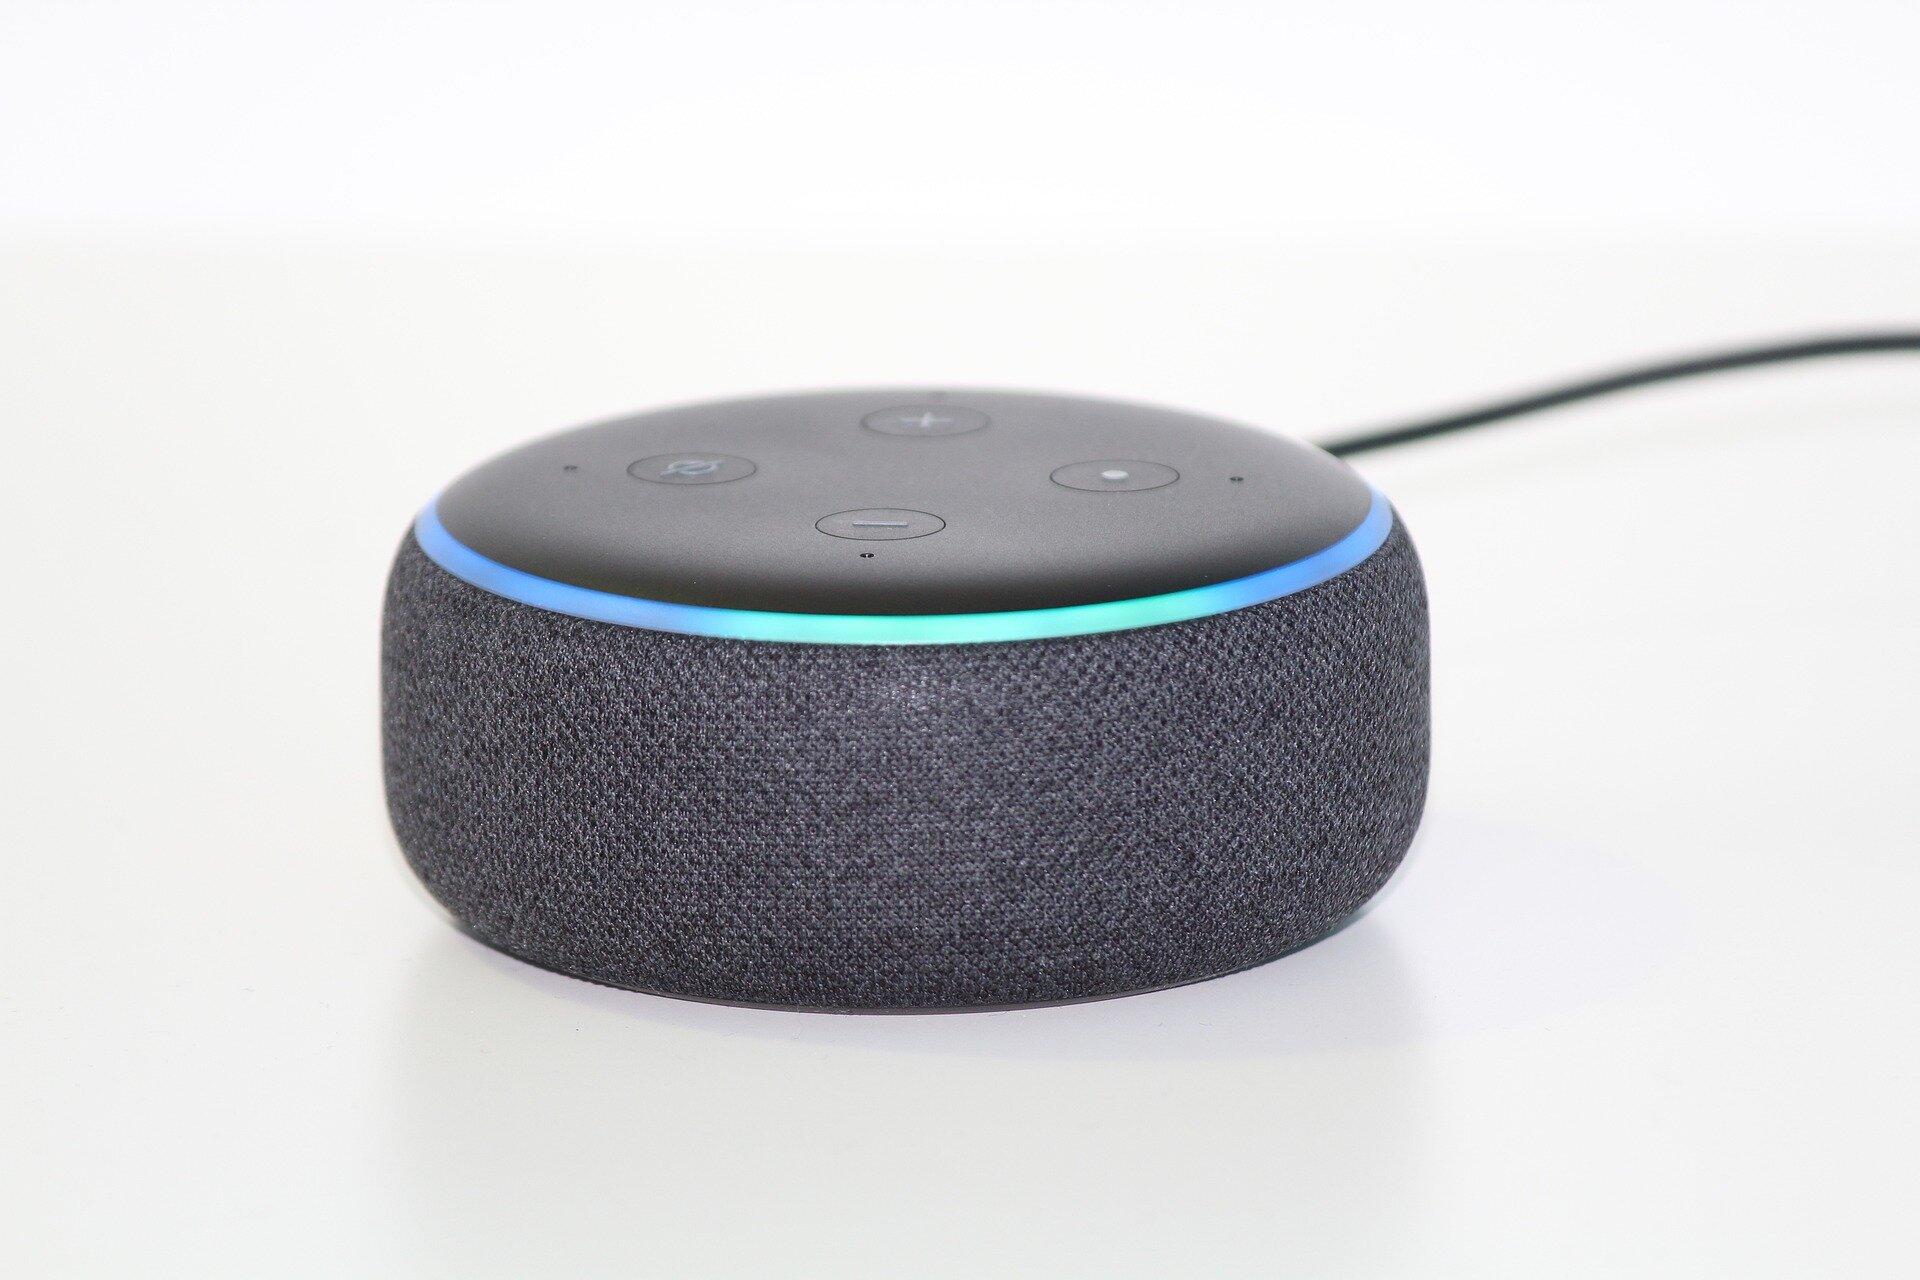 Amazon Alexa bug exposed voice data